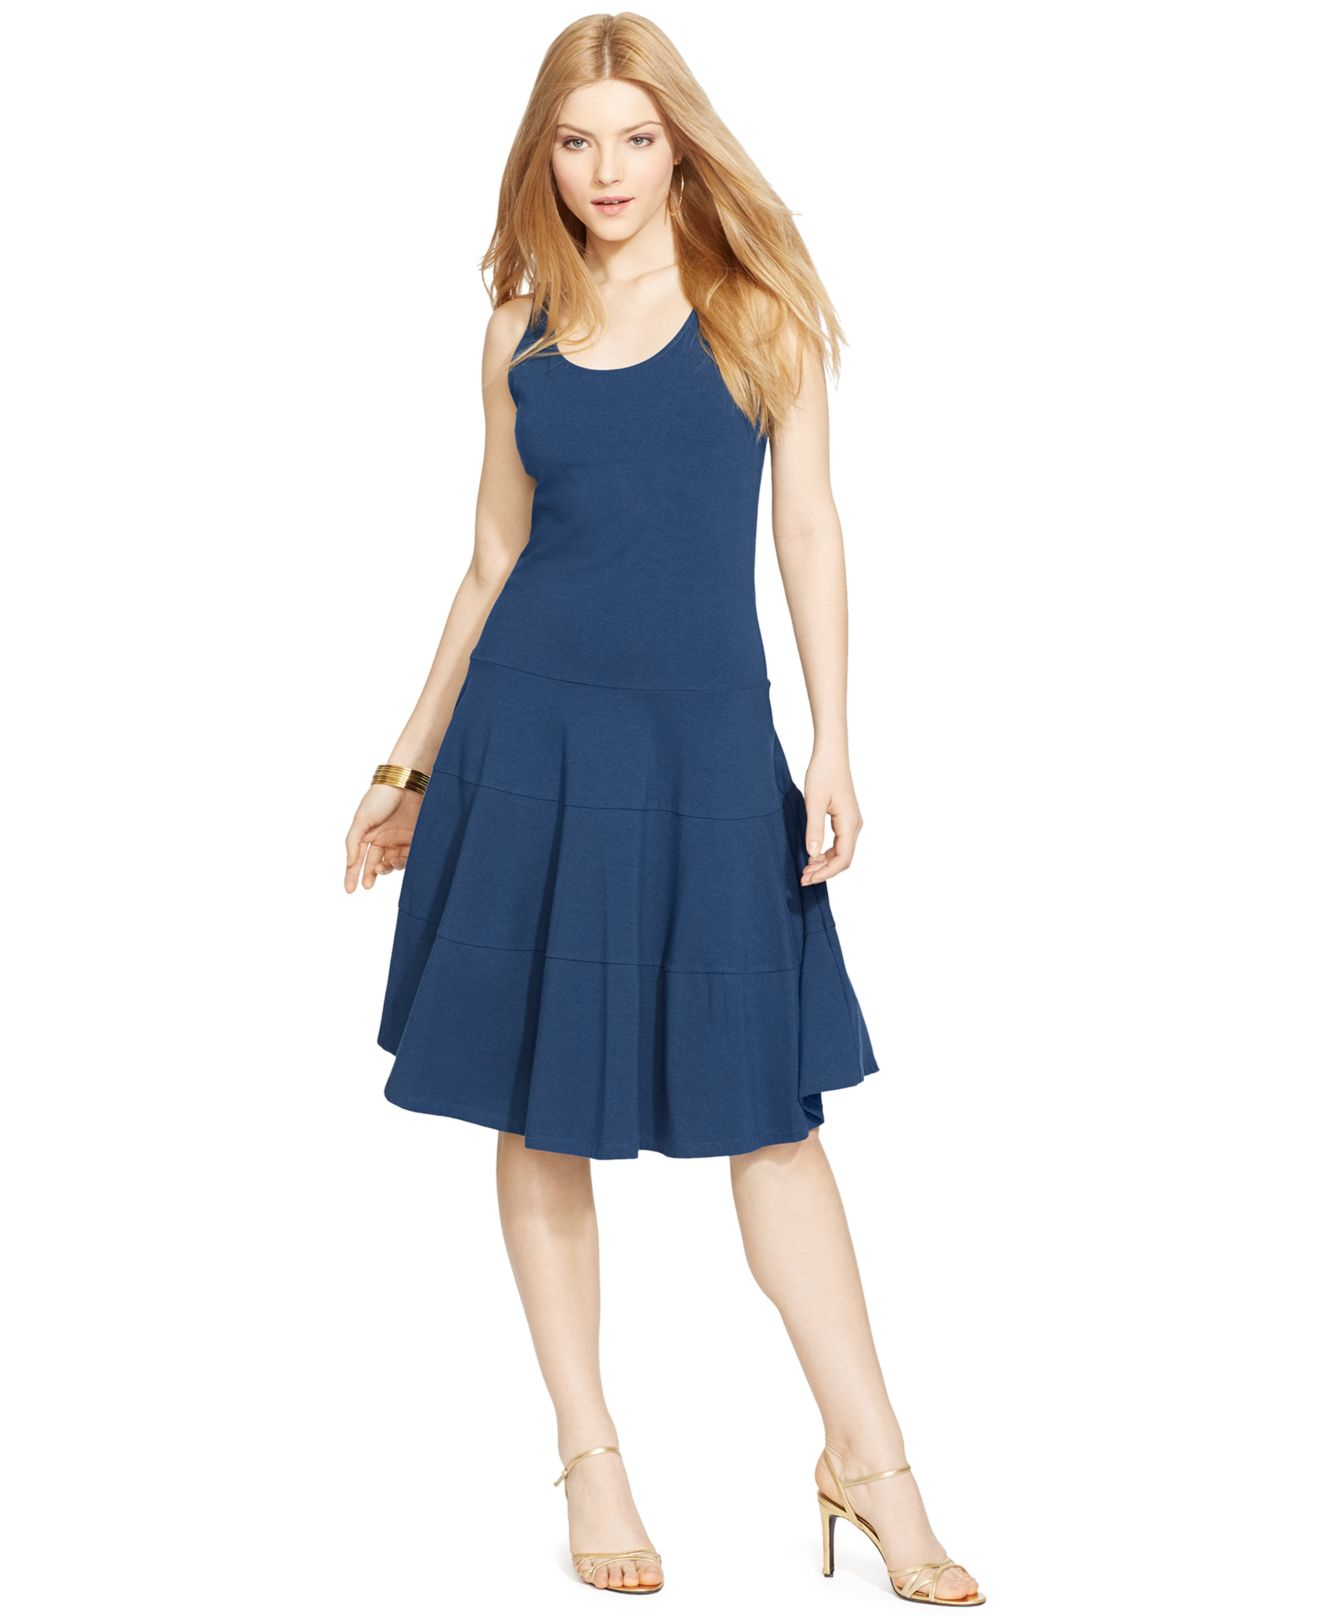 Lauren by ralph lauren Sleeveless Fit & Flare Dress in Blue | Lyst